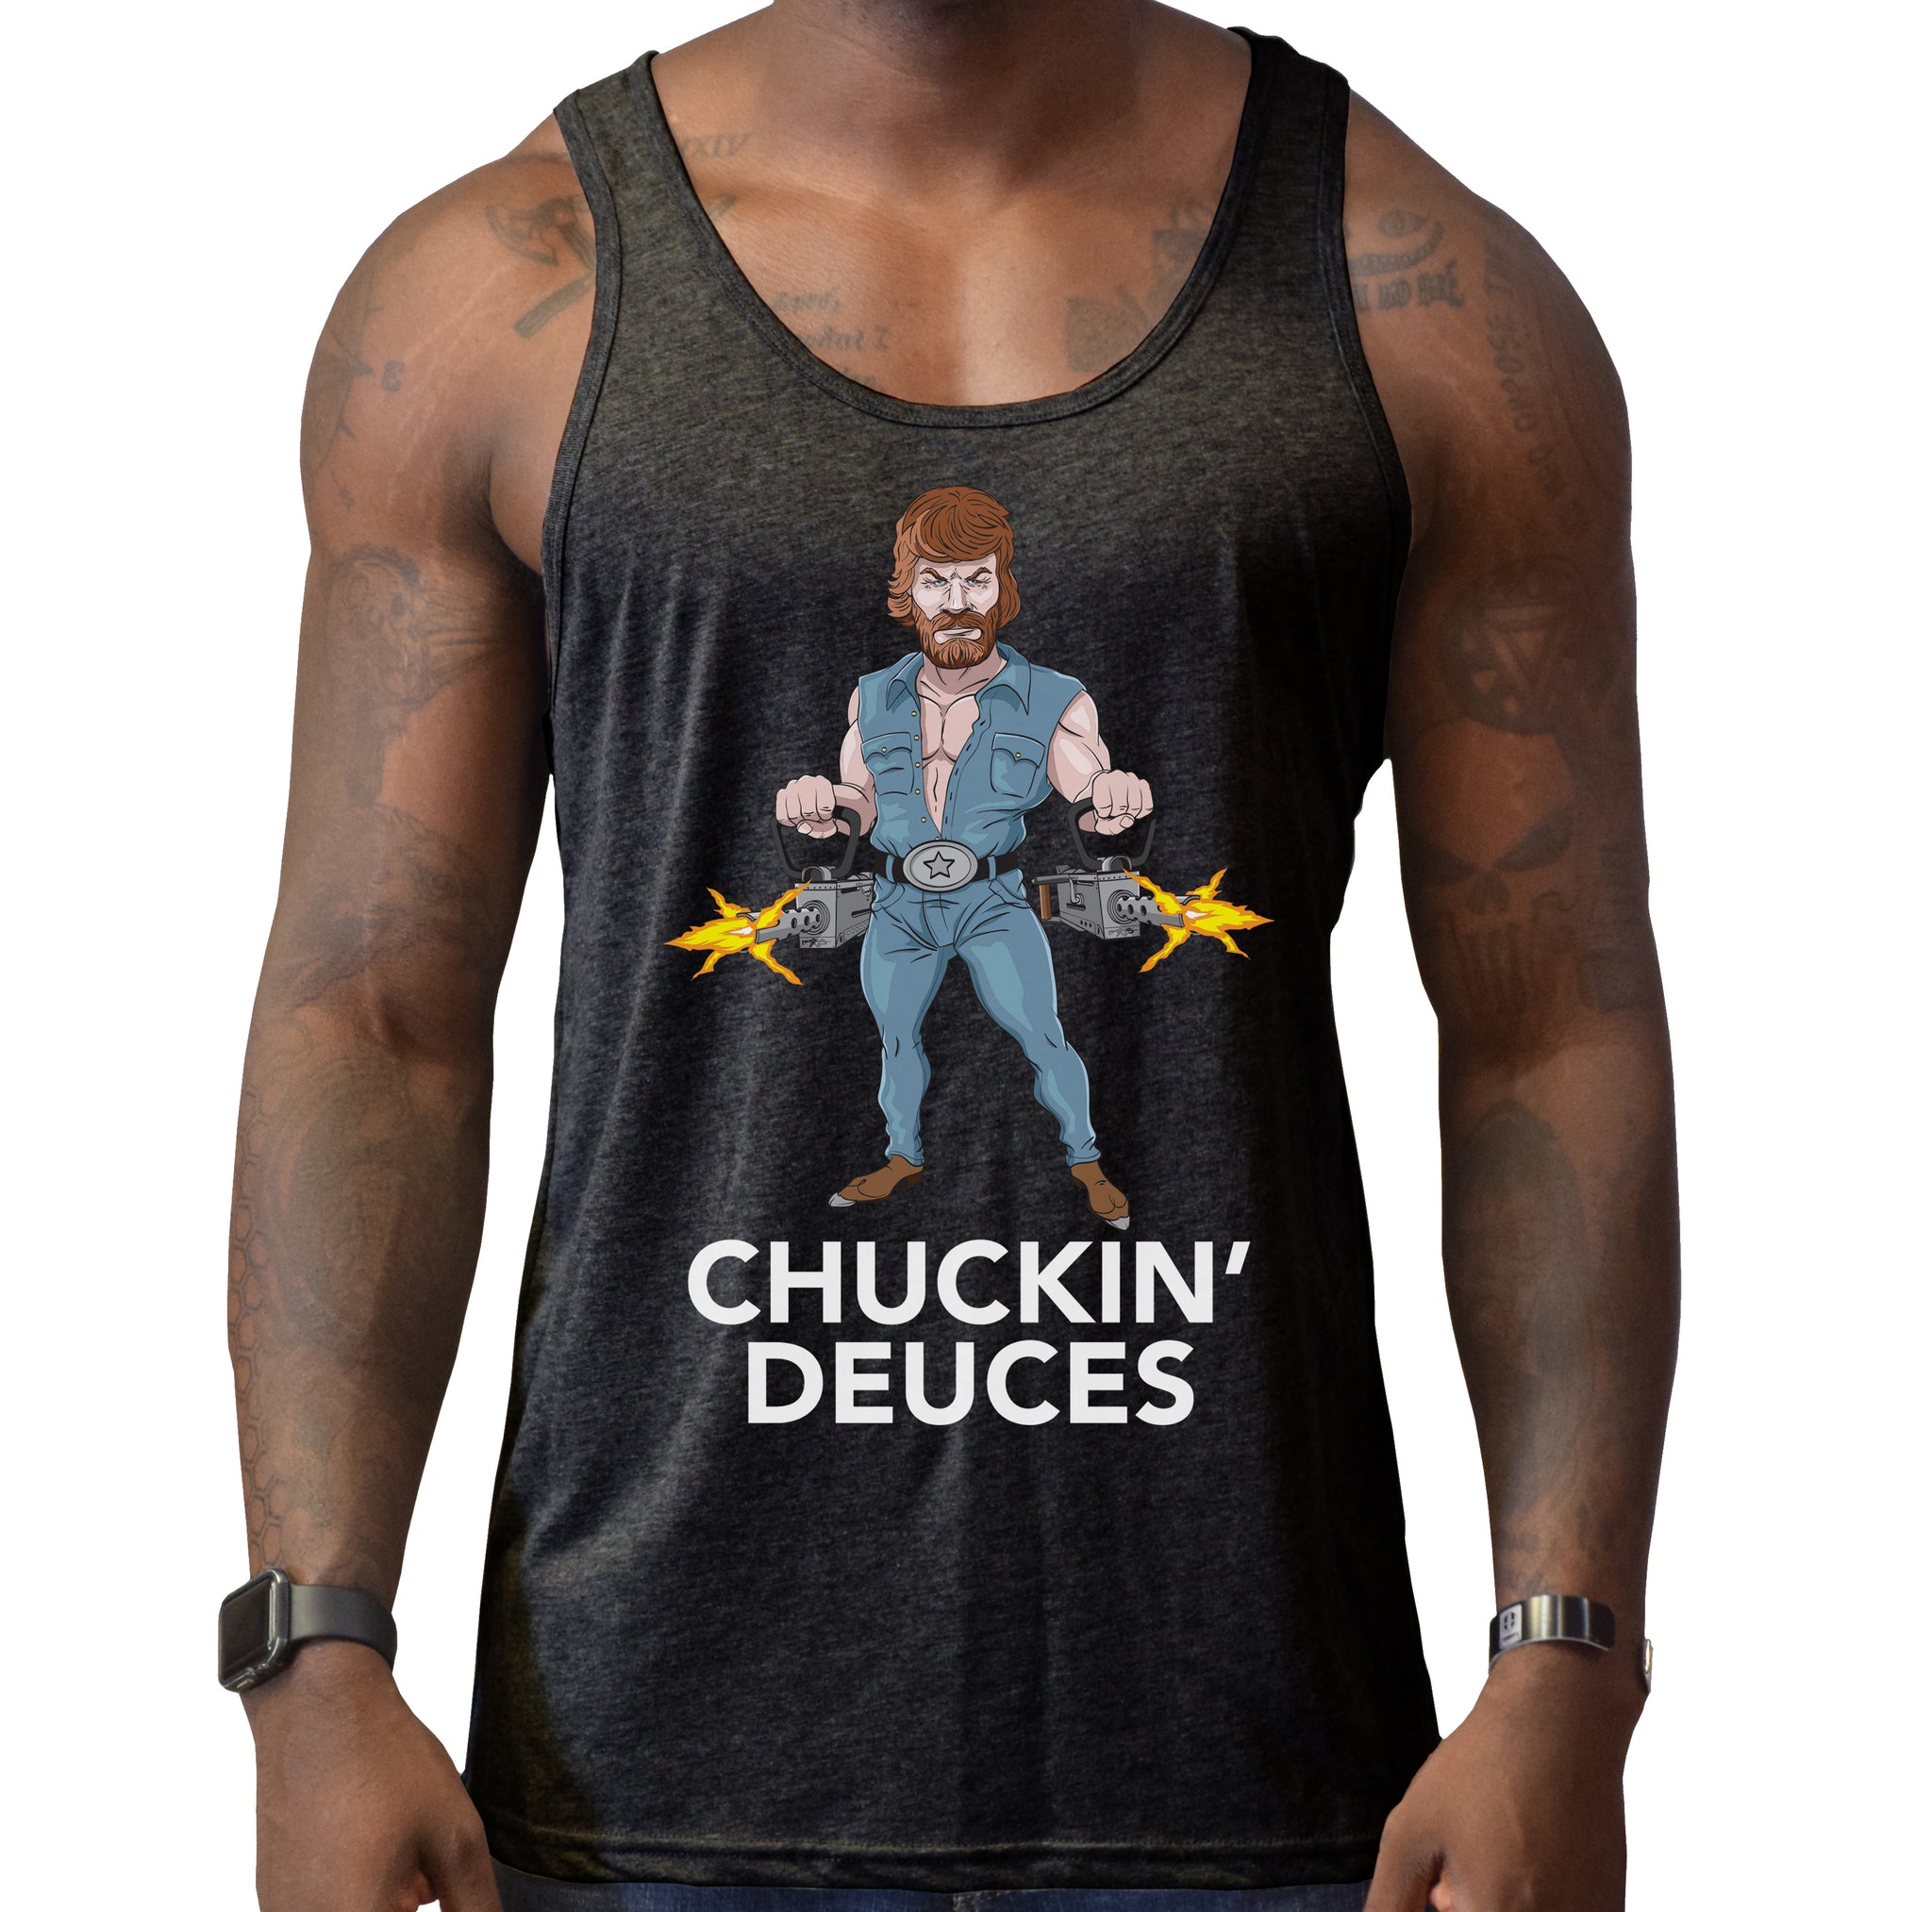 Chuckin' Deuces Tank